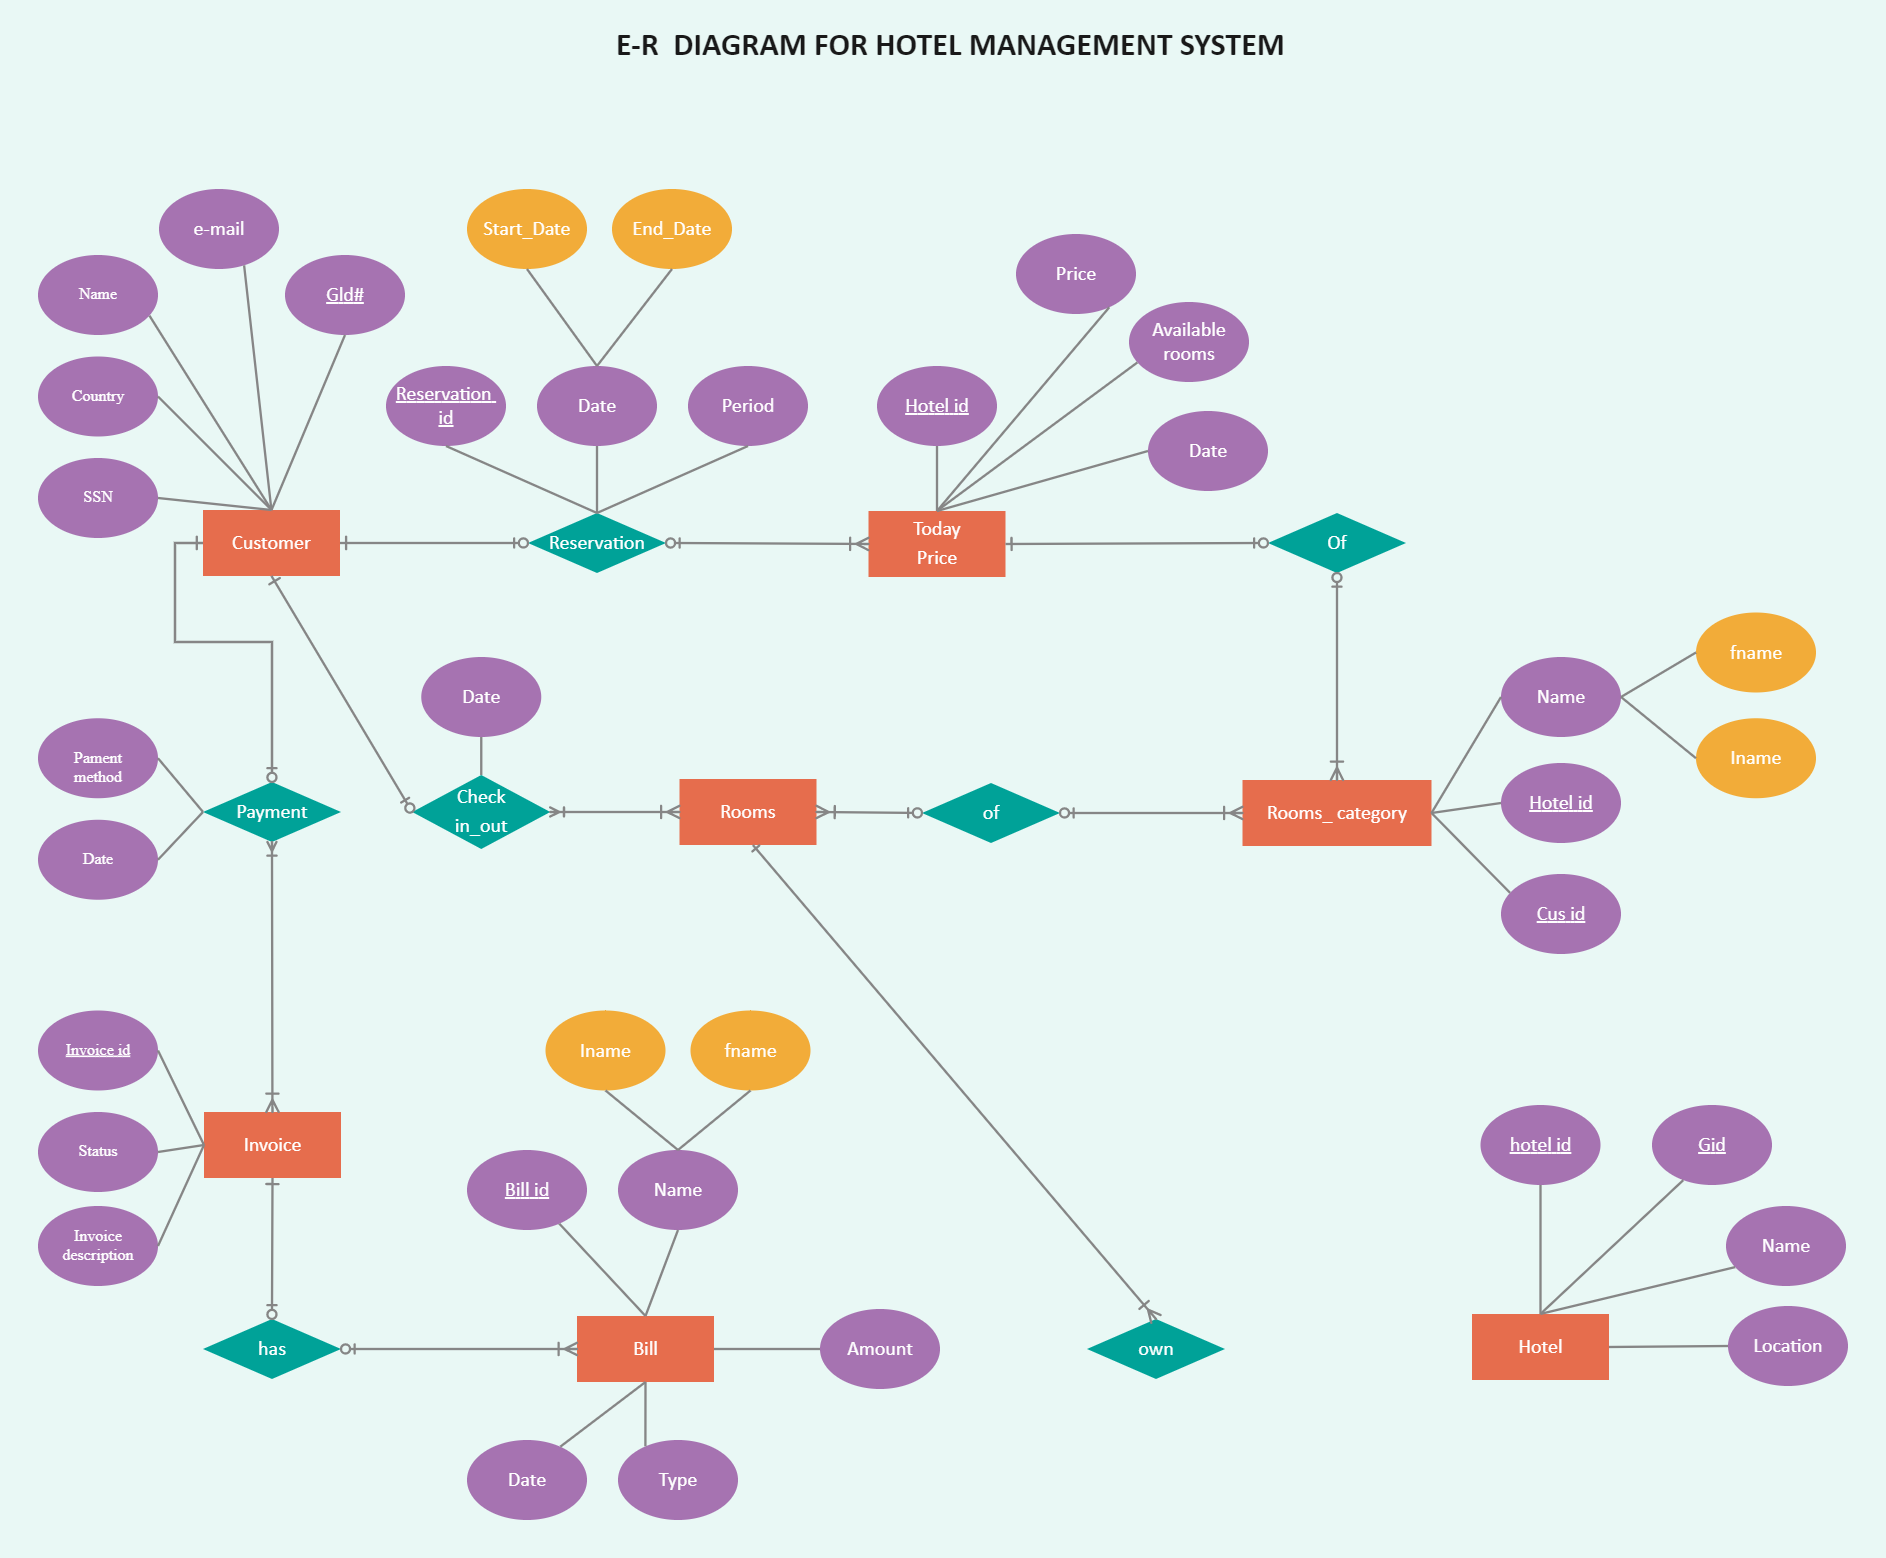 Entity Relationship Diagram for Hotel Management System